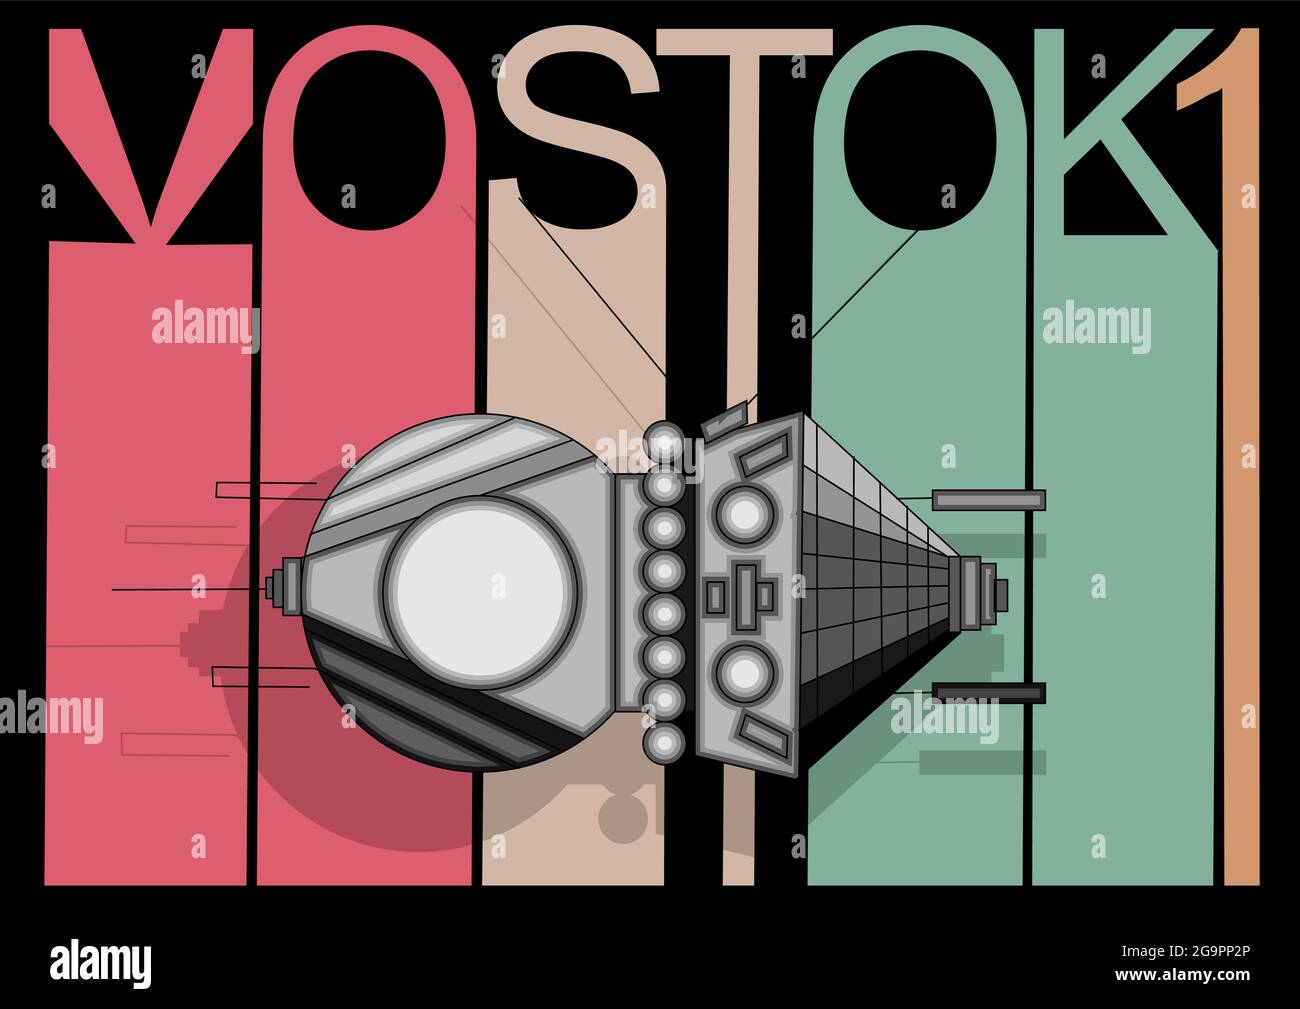 vostok 1 poster, satellite of unione sovetica Stock Vector